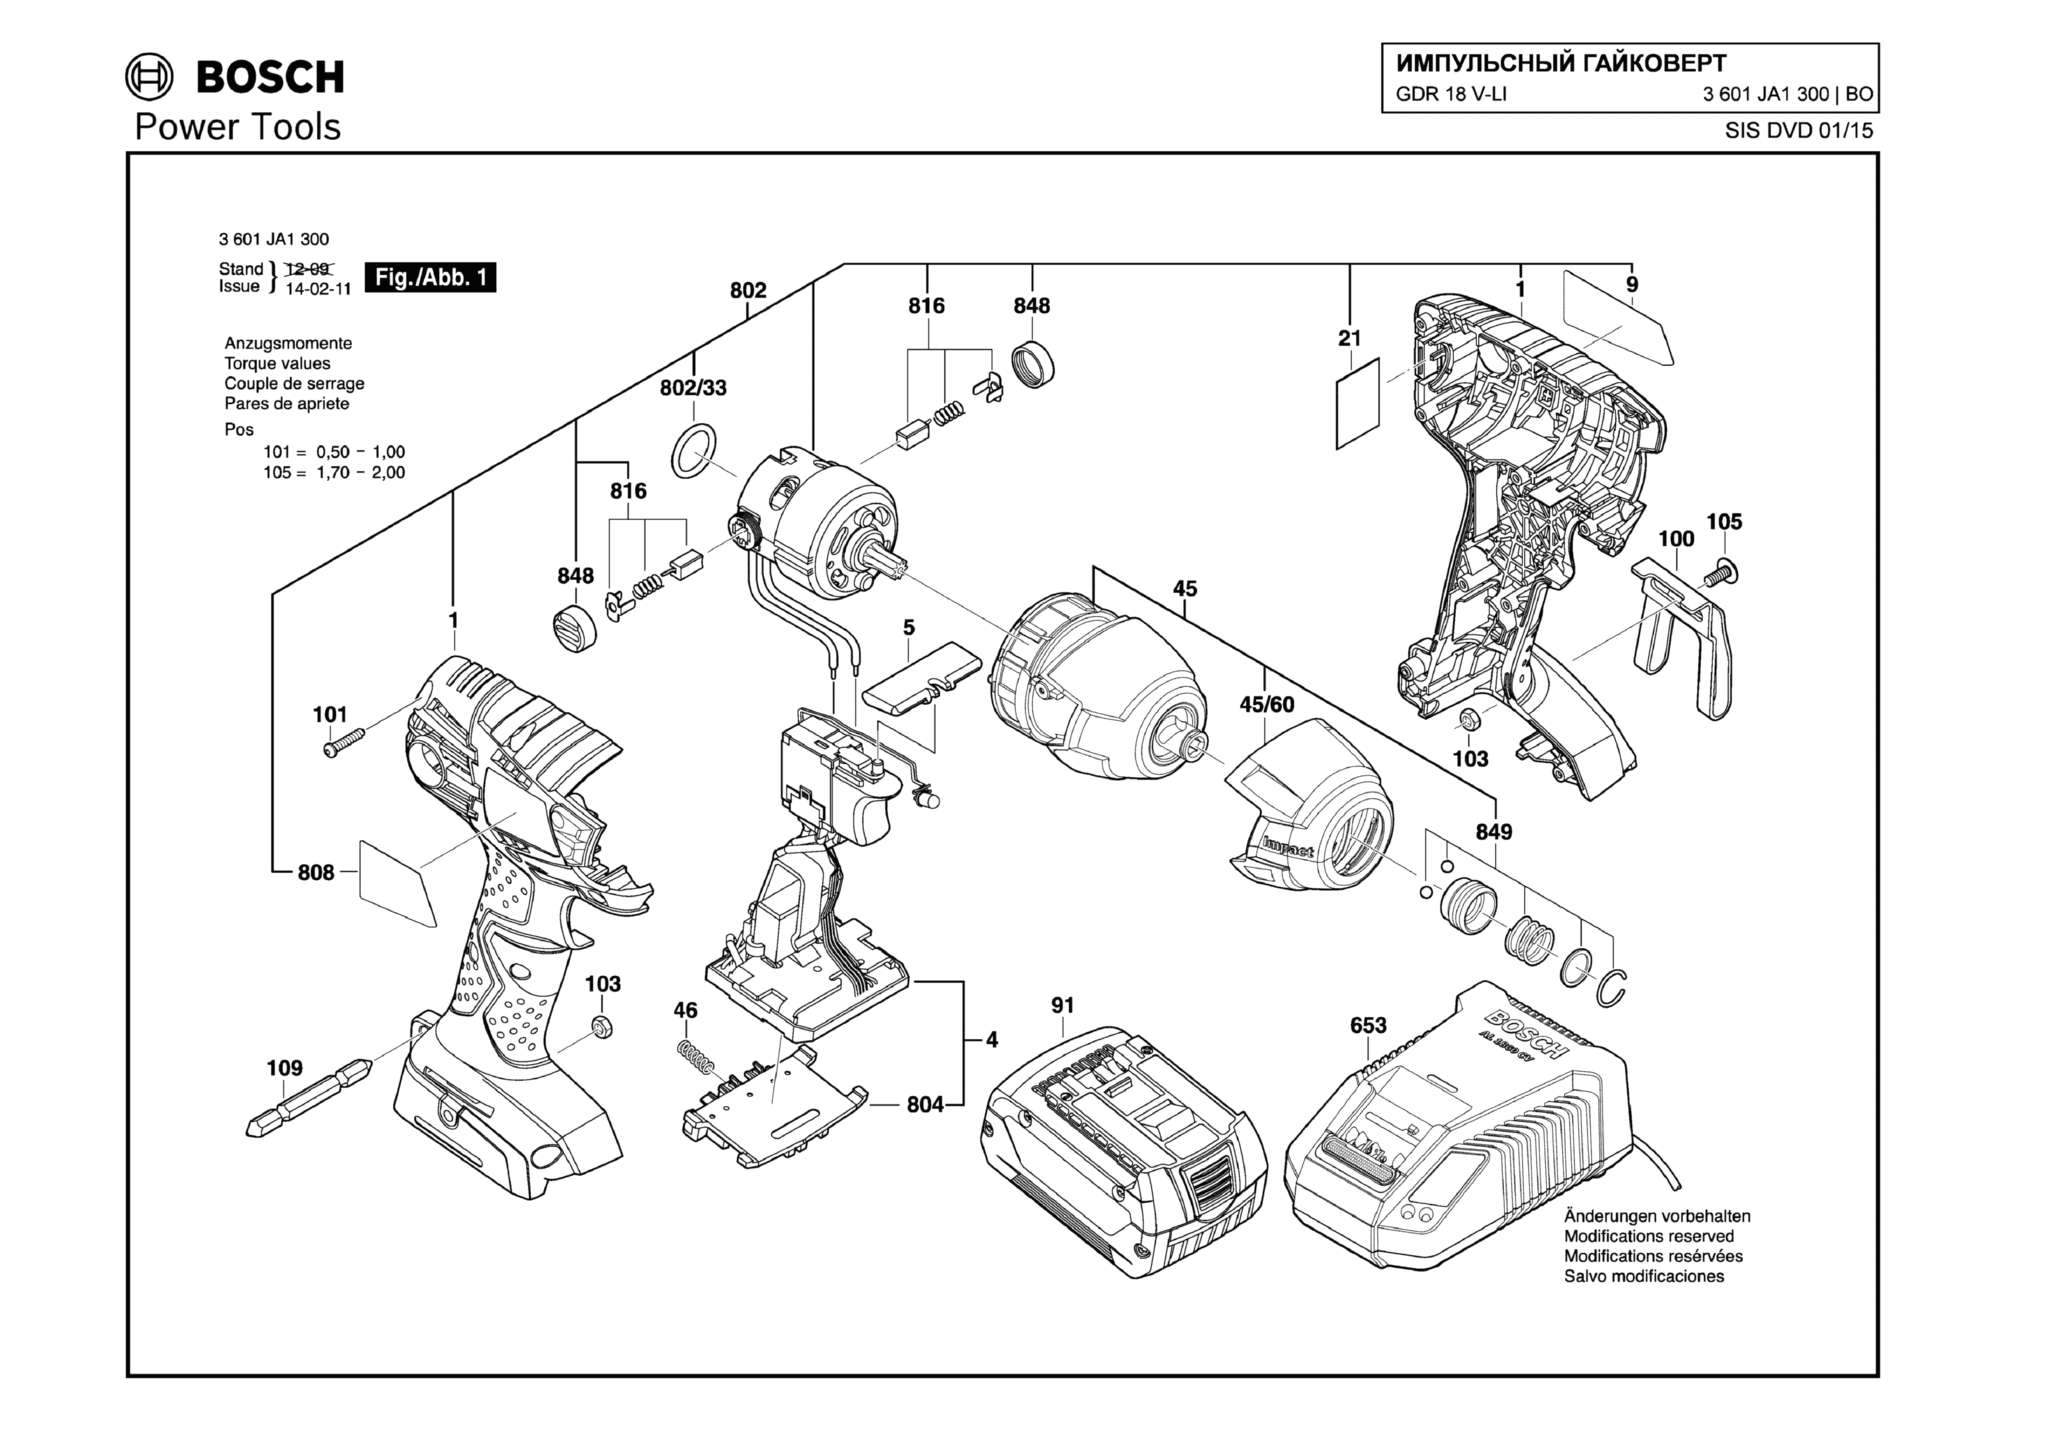 Запчасти, схема и деталировка Bosch GDR 18 V-LI (ТИП 3601JA1300)